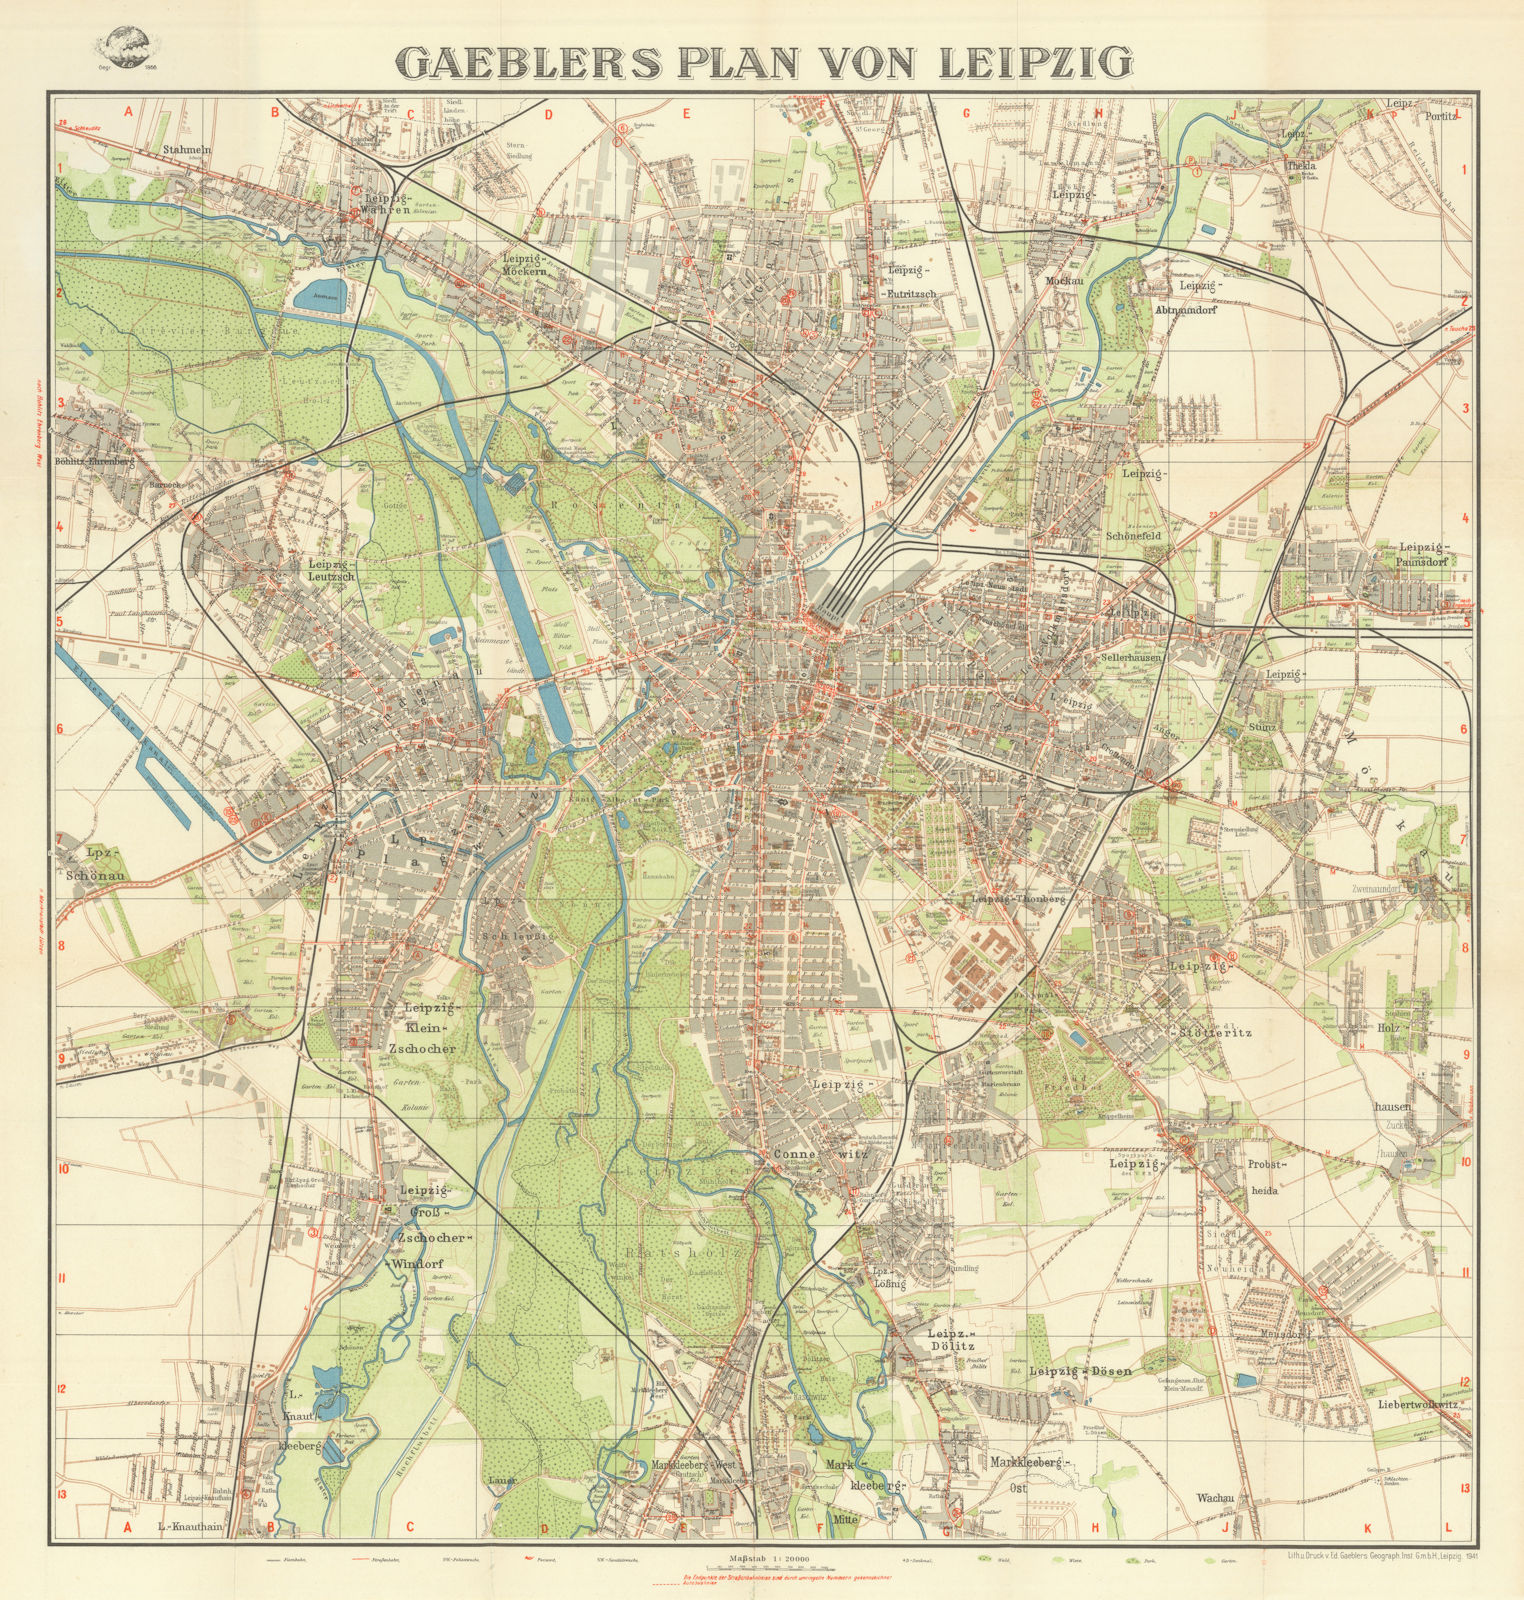 Associate Product Gaebler's Plan von Leipzig. City plan 1941 old vintage map chart